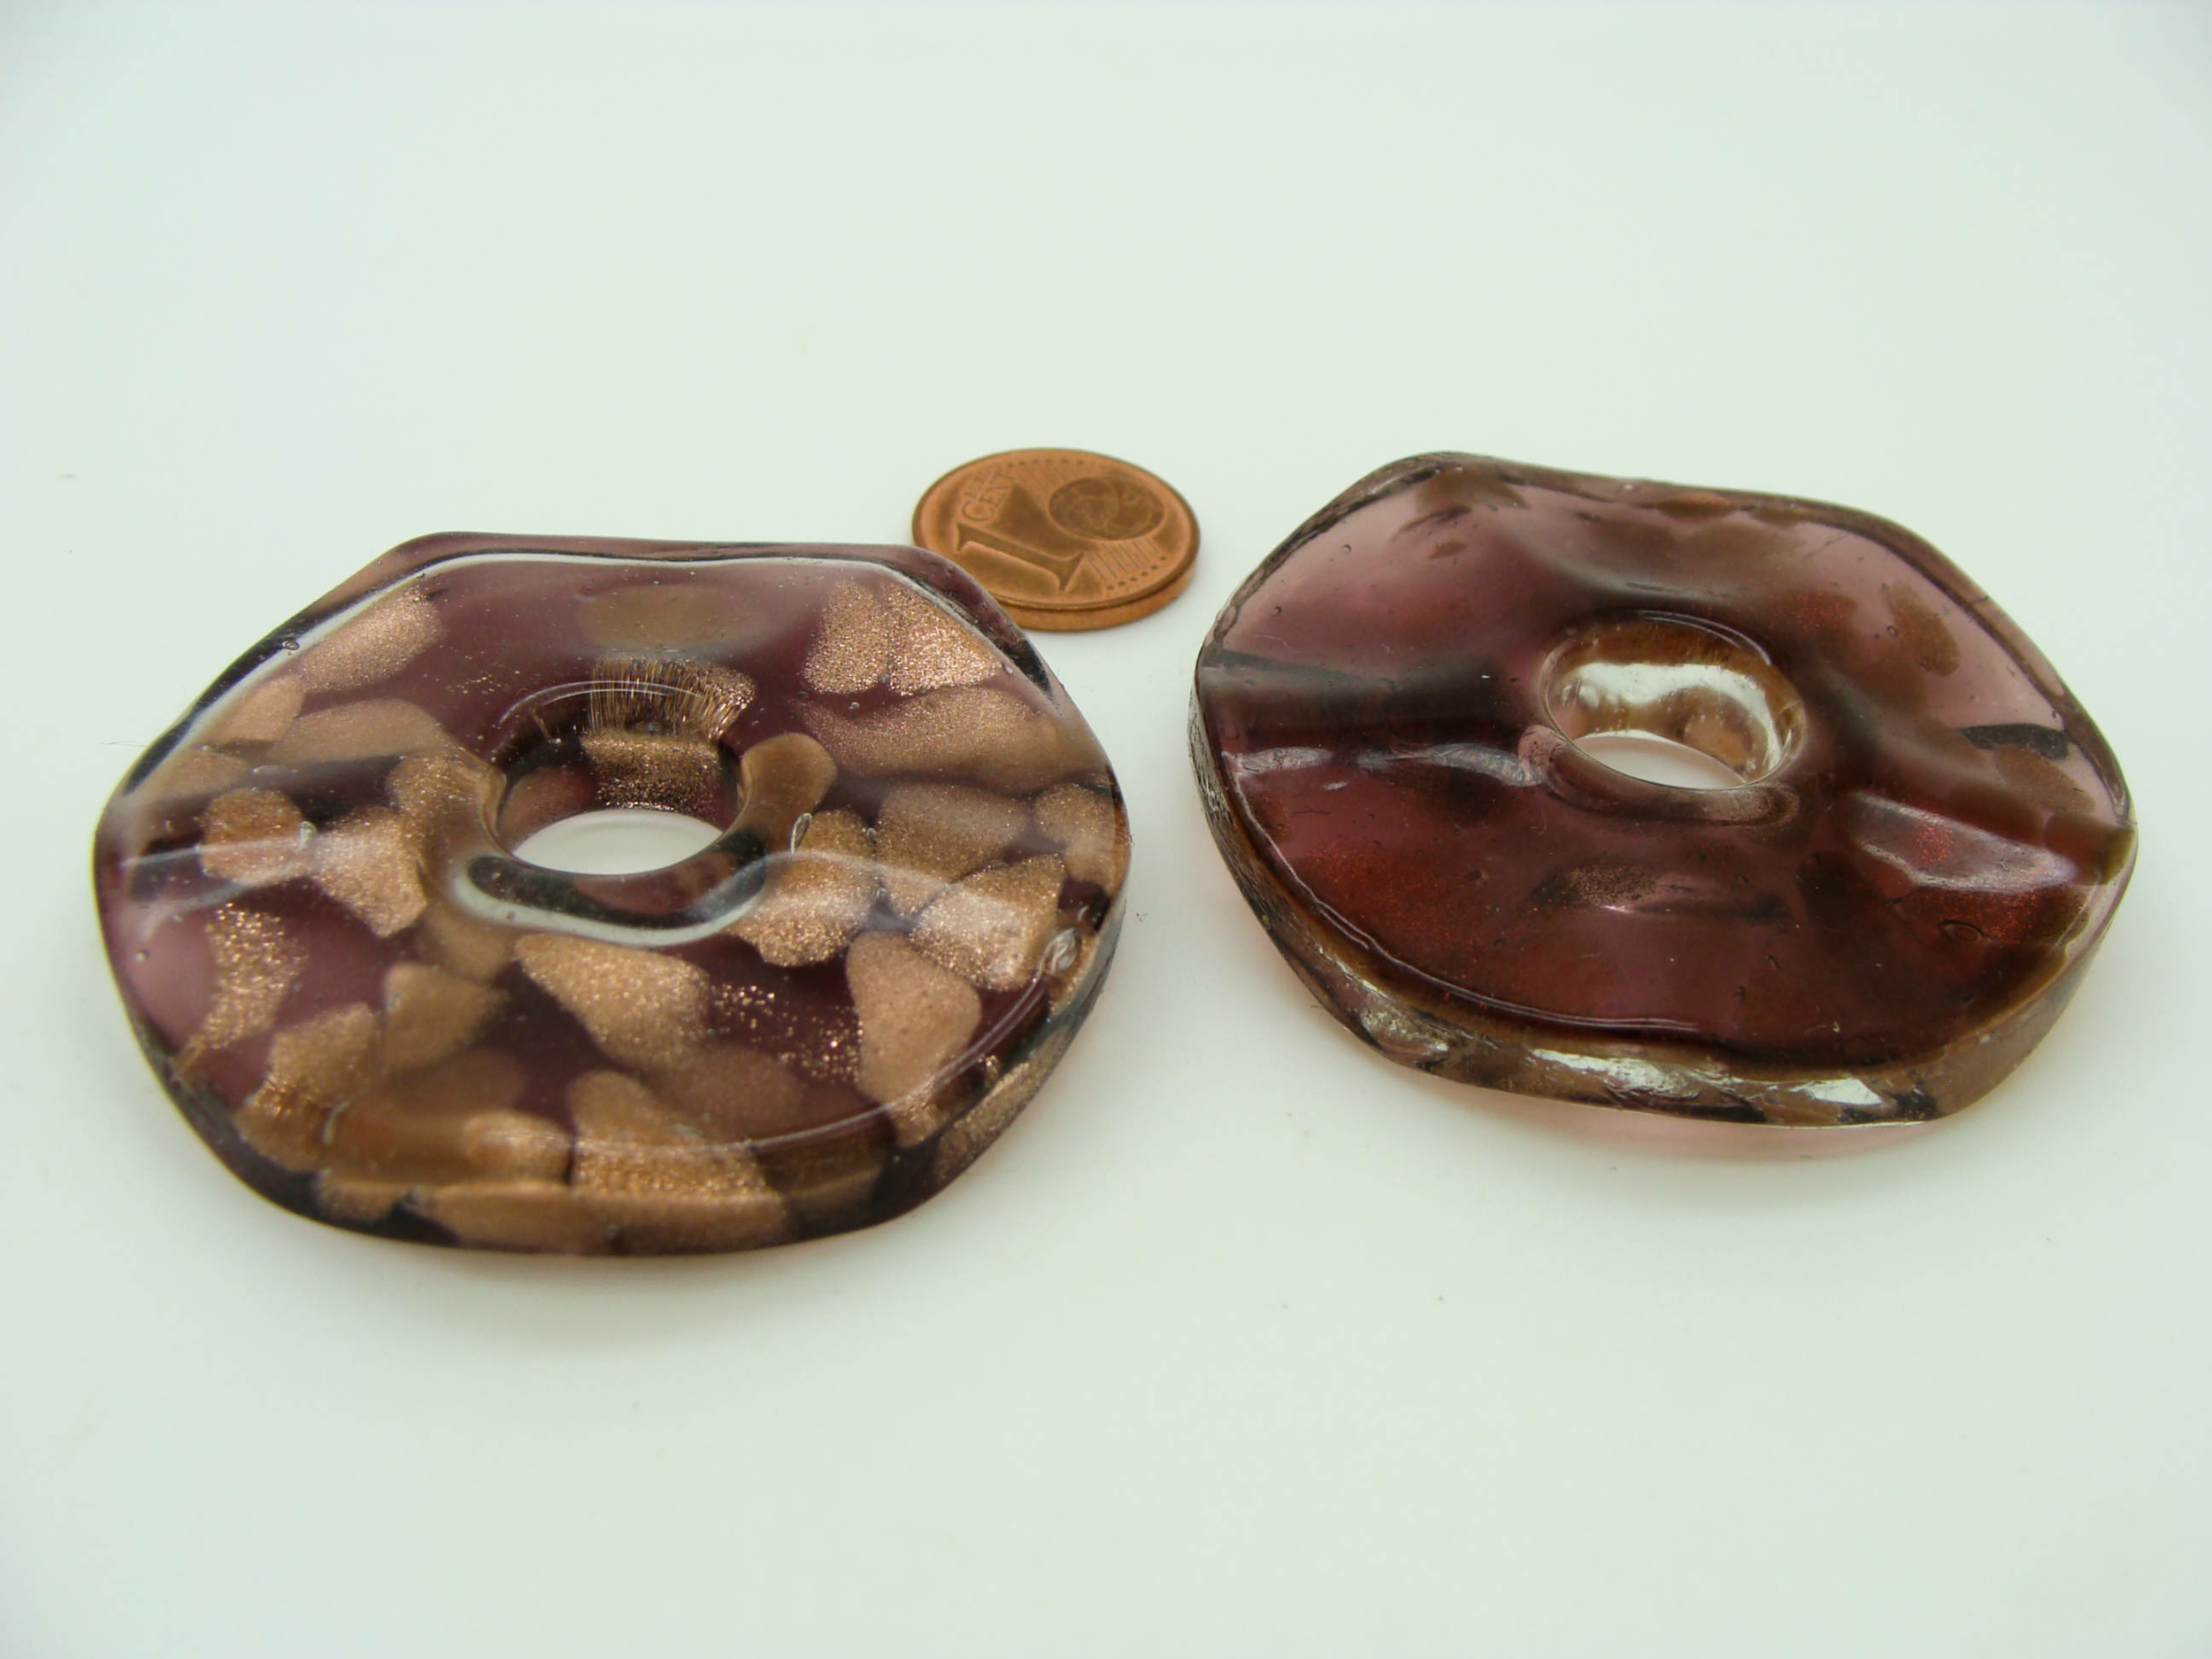 Pend-287-4 pendentif verre donut violet